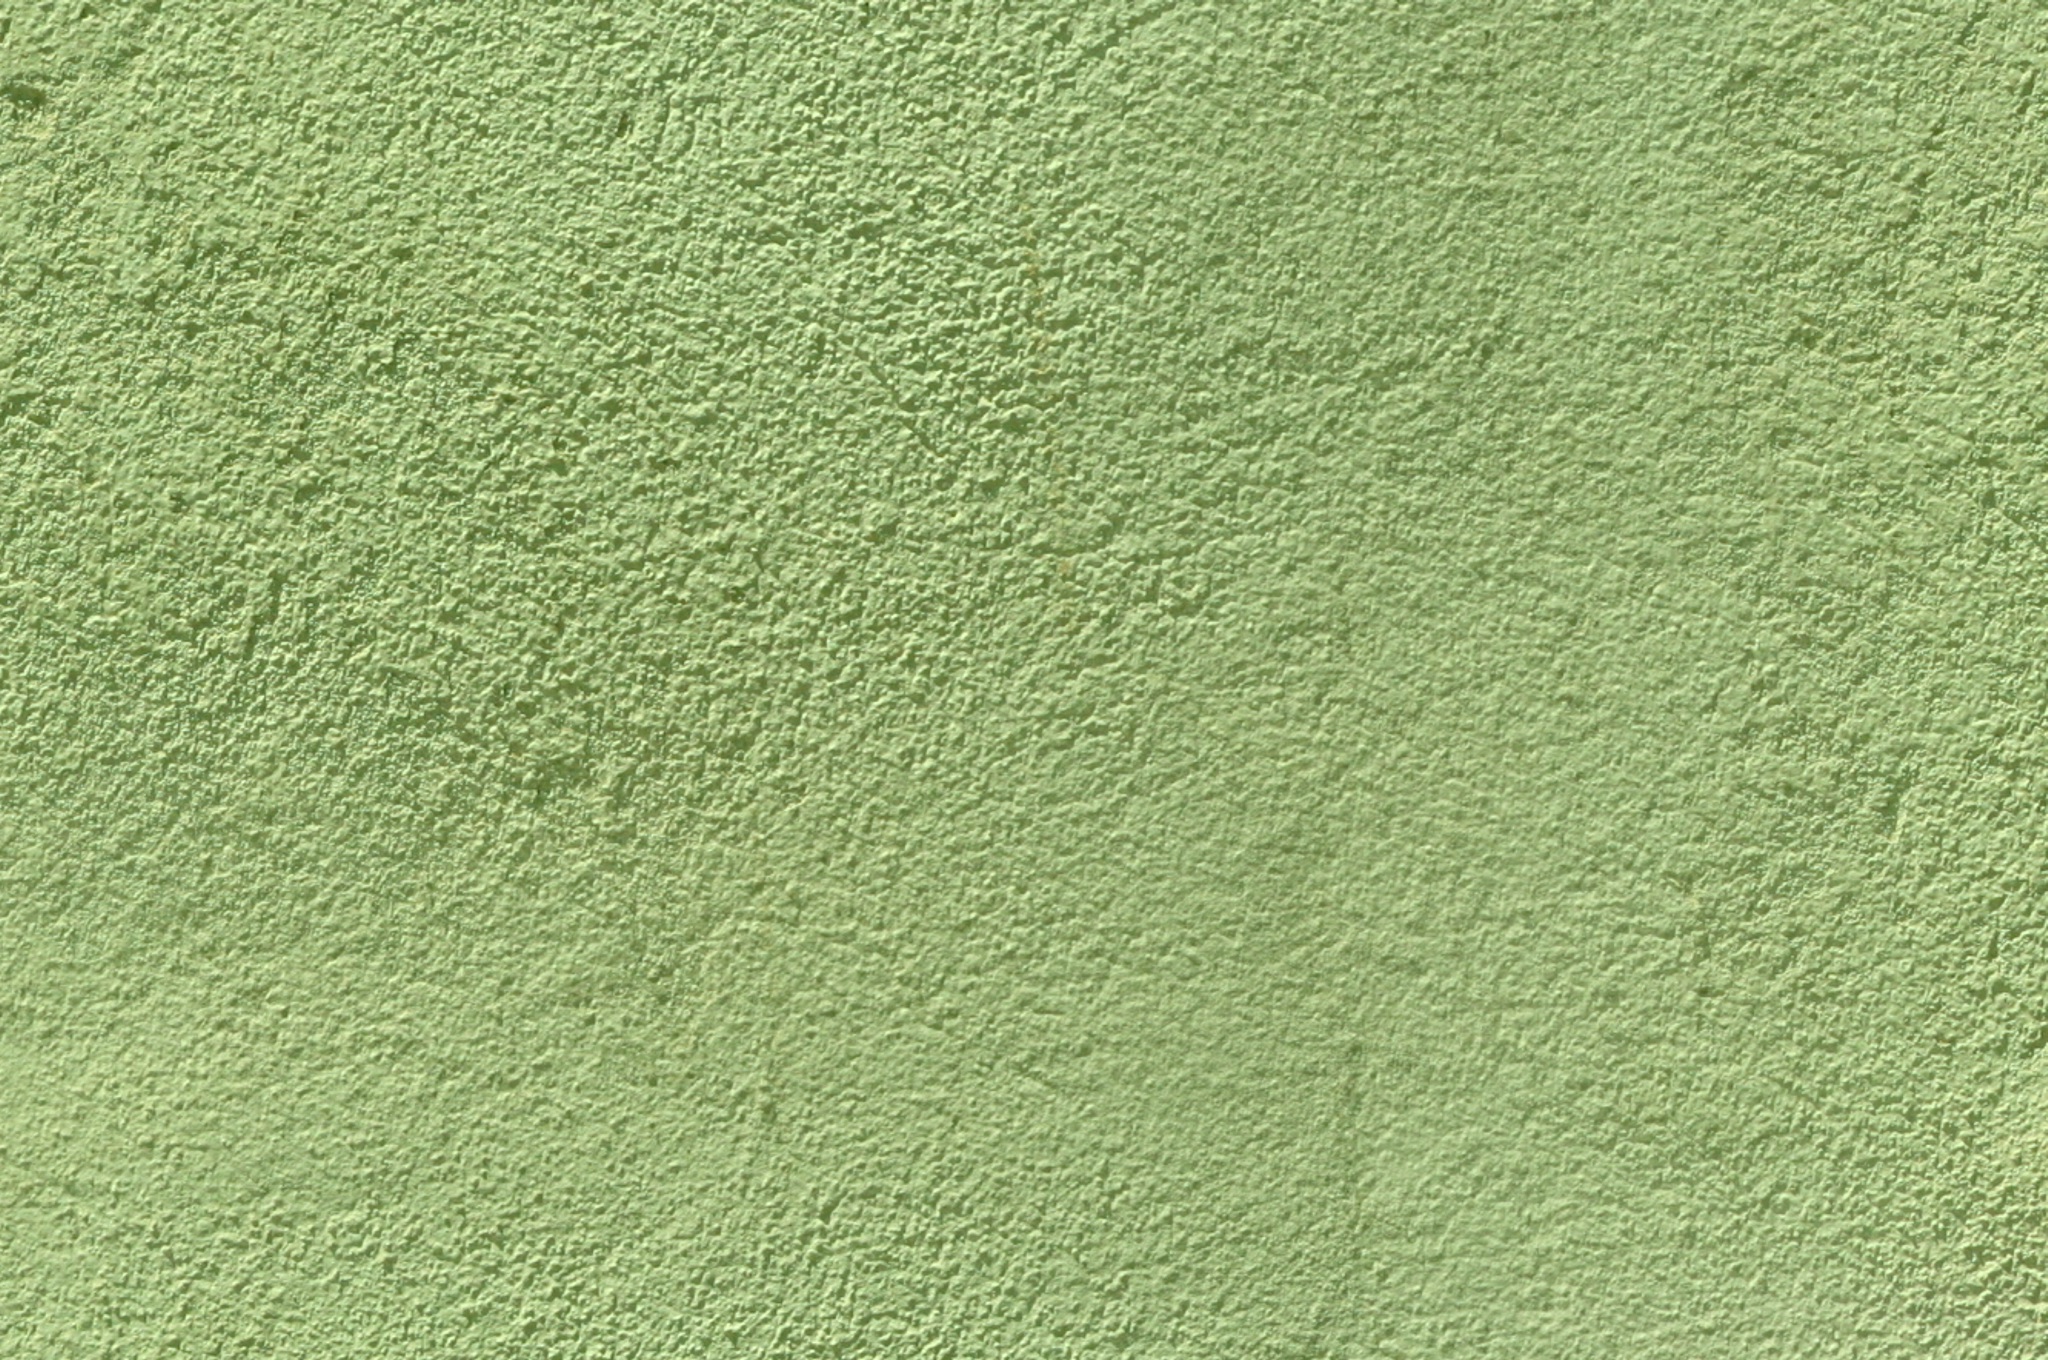 Green concrete texture photo